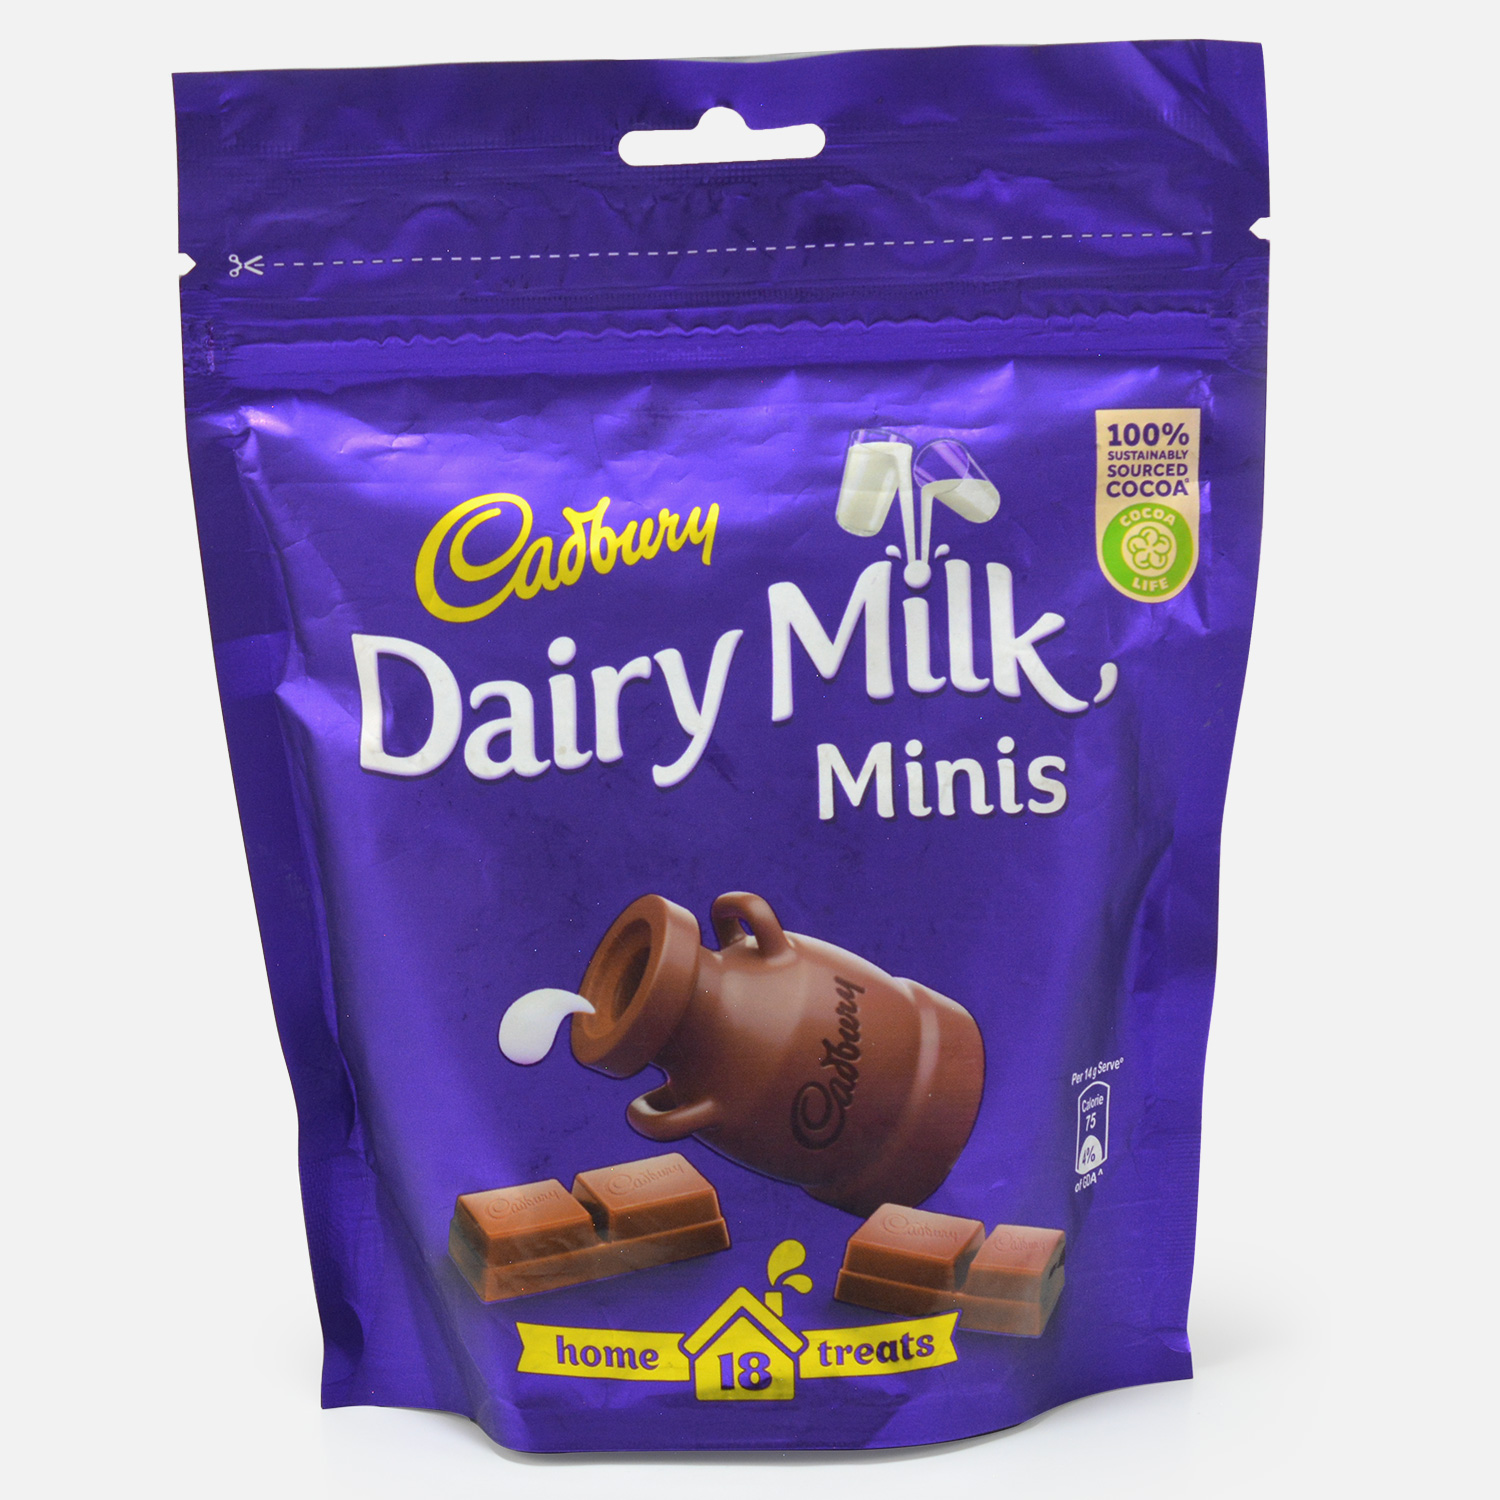 Cadbury Dairy Milk Minis Pack of 18 Treats Chocolate